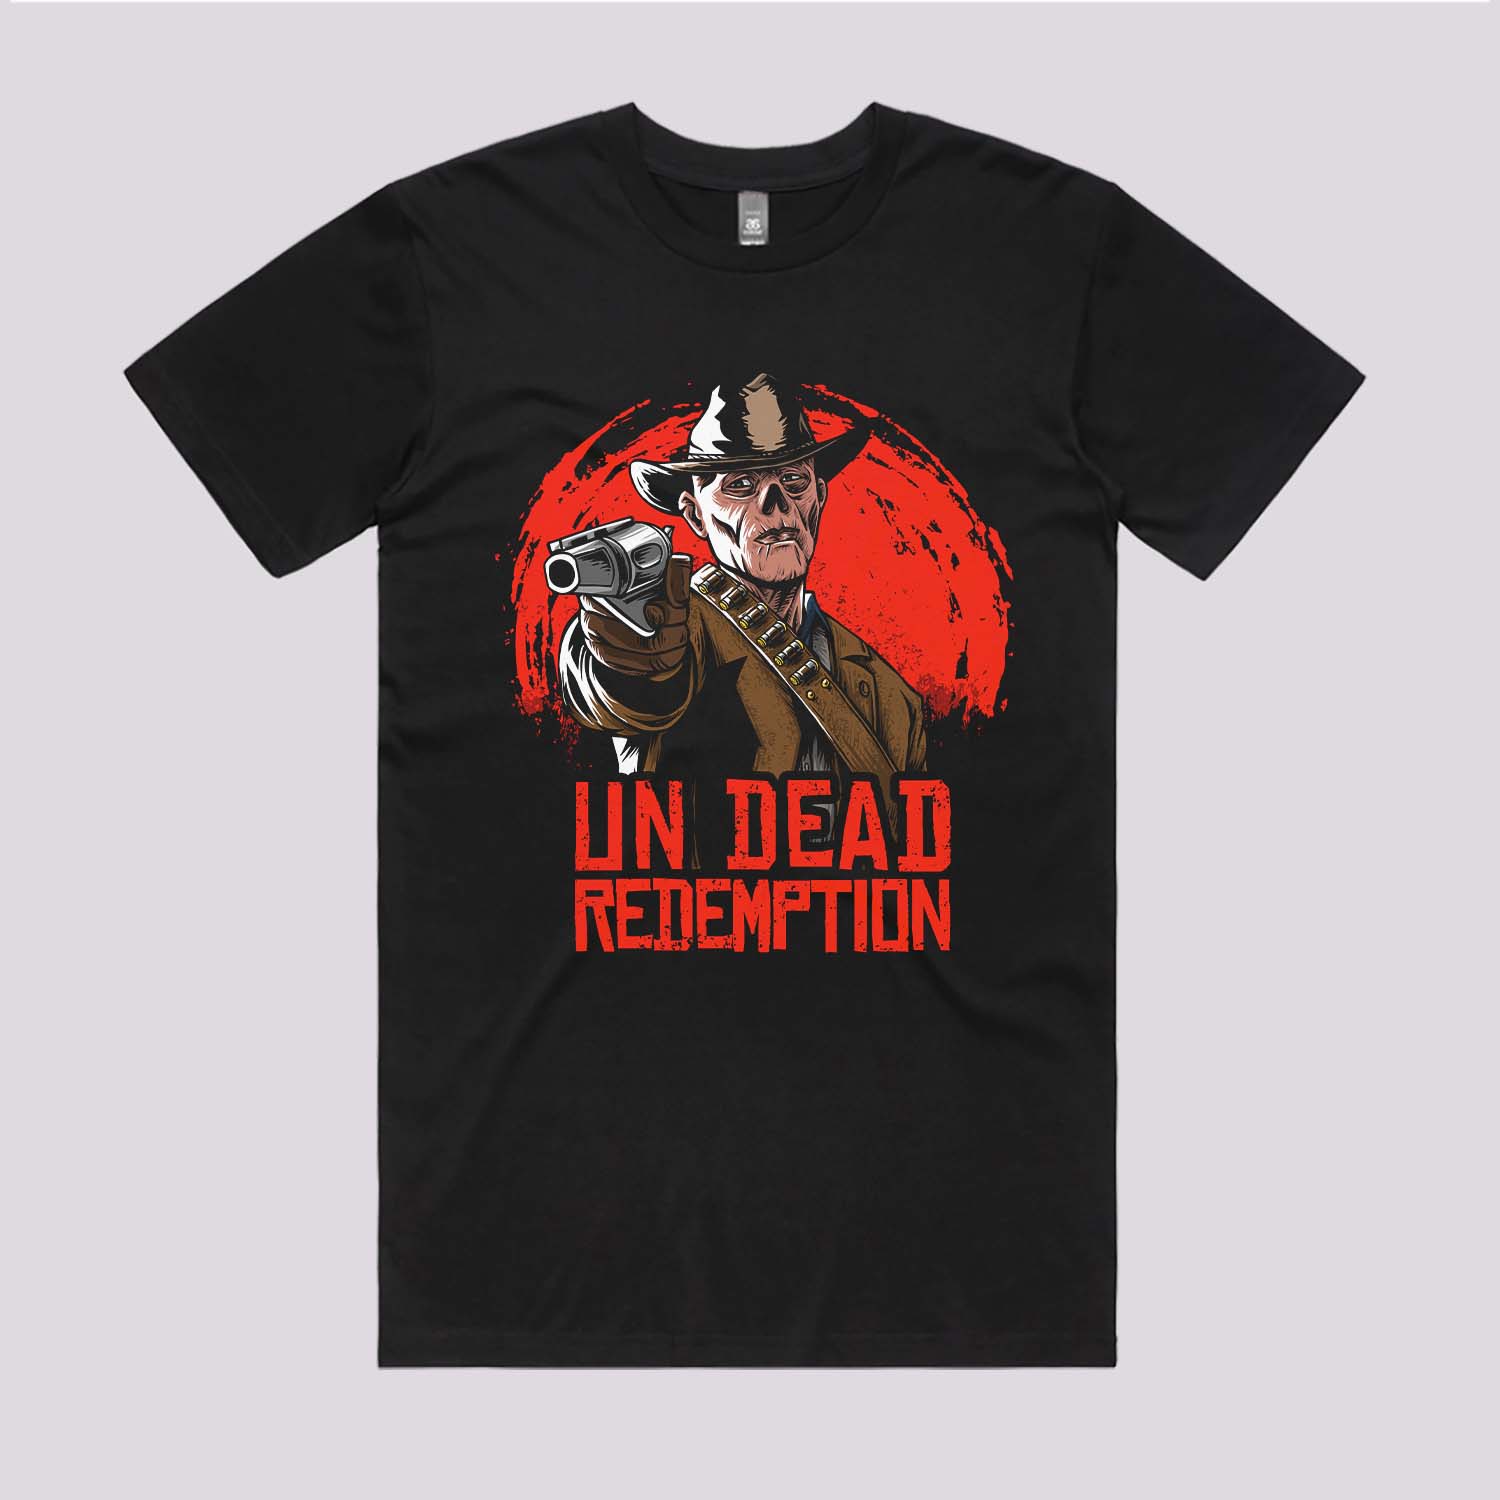 Undead Redemption T-Shirt